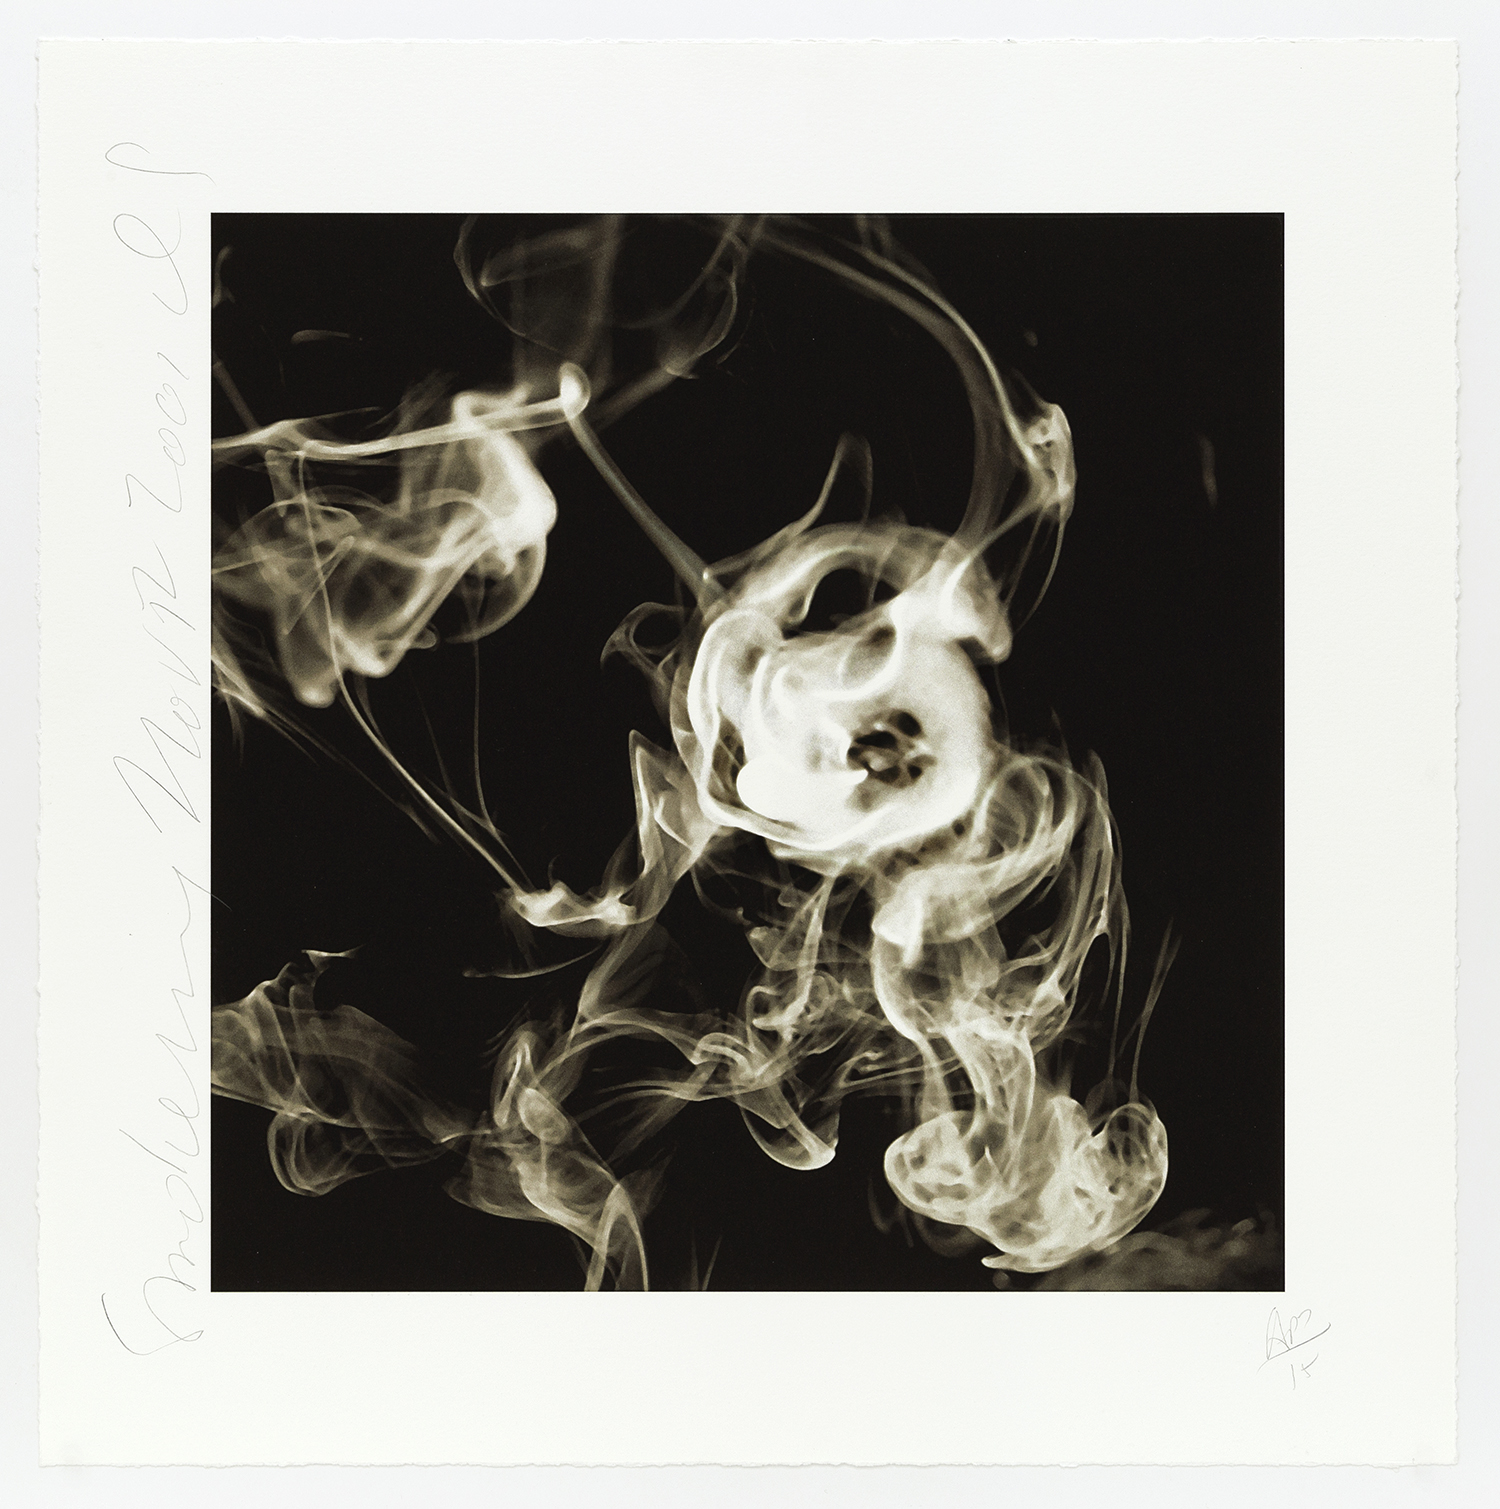 Smoke Rings, Nov. 12, 2001, Inkjet, 22 1/2 x 22 1/2 inches (57.1 x 57.1 cm), Edition of 75